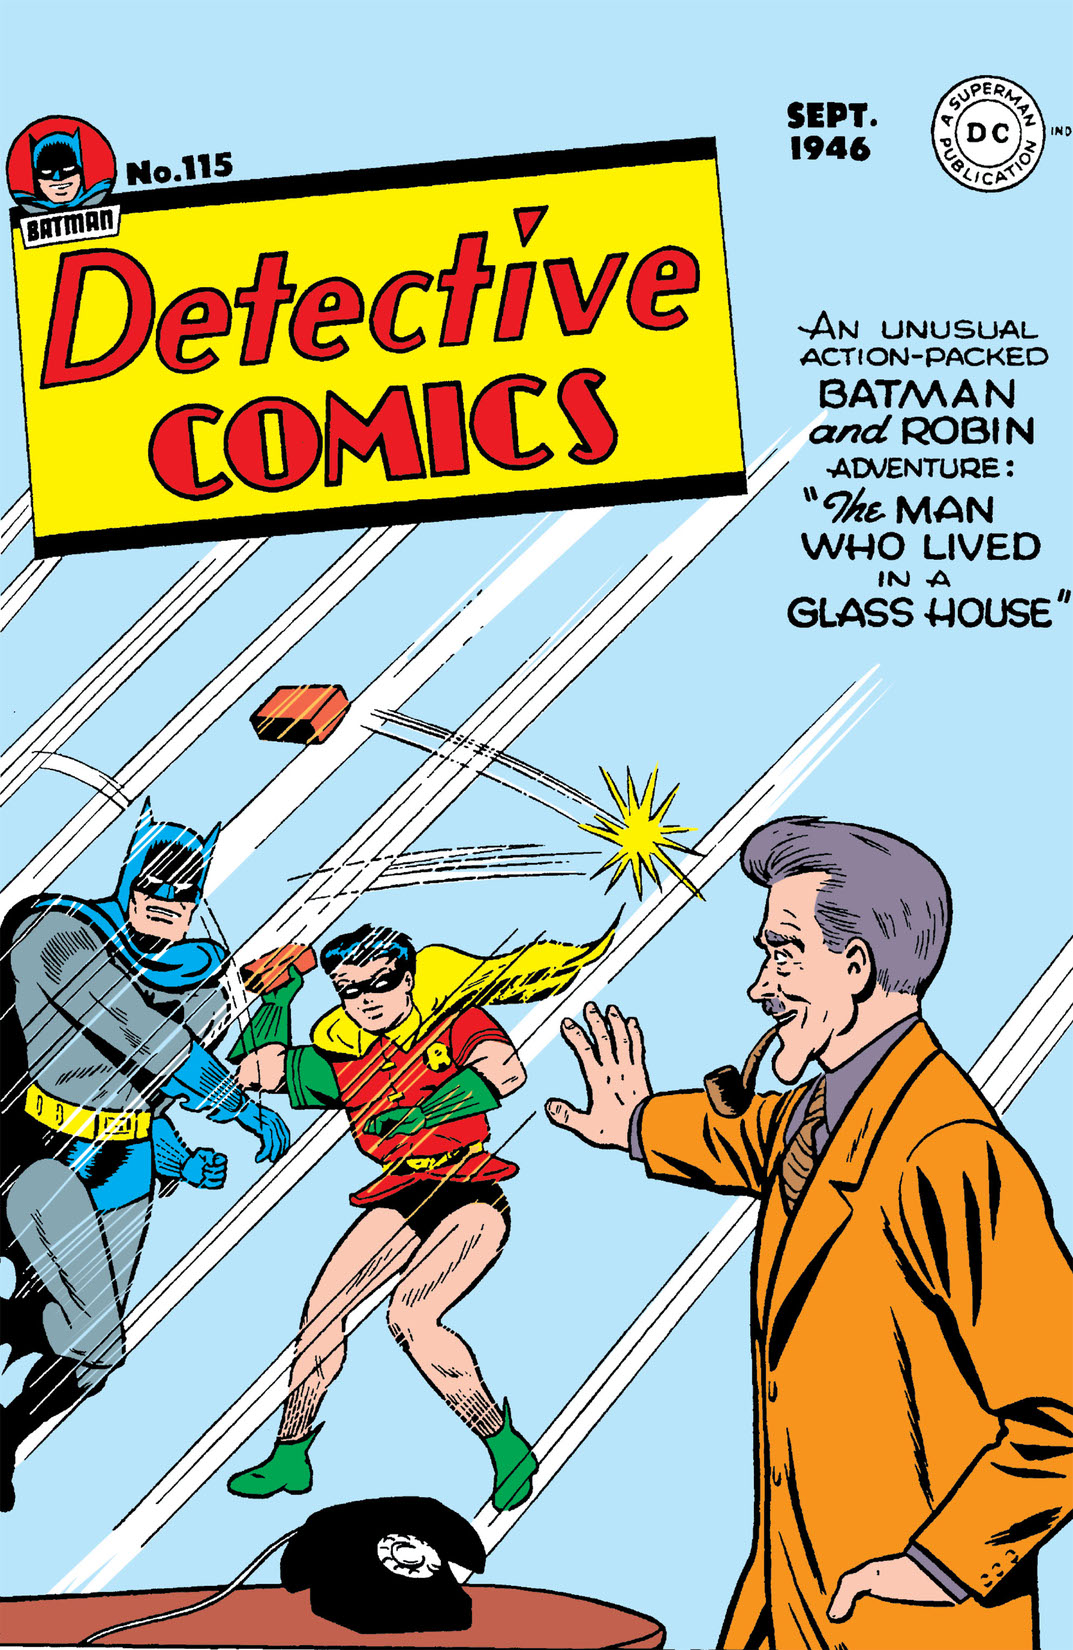 Detective Comics (1937-) #115 preview images